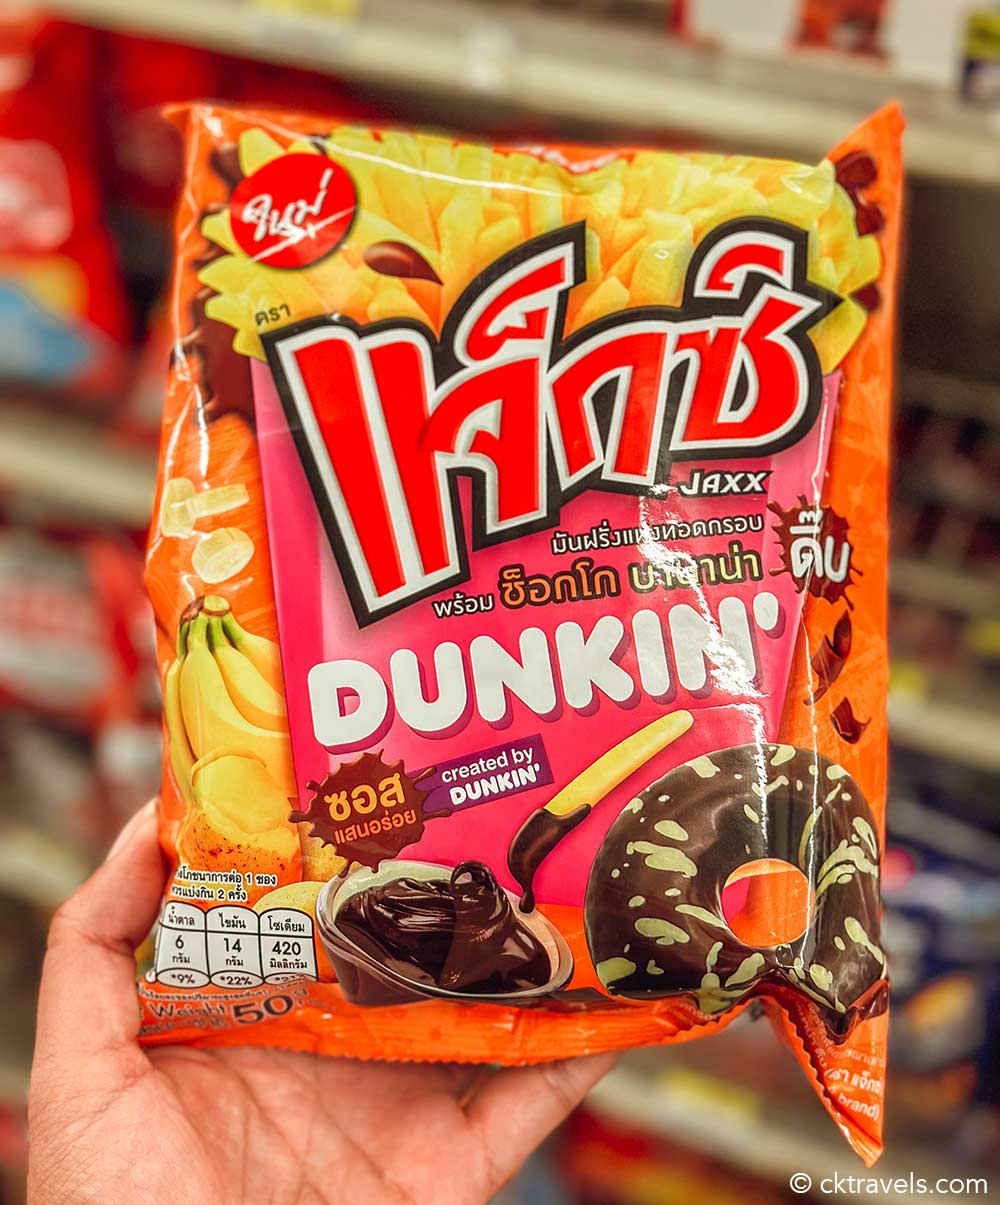 Dunkin Doughnuts chips crisps Thailand 7-eleven